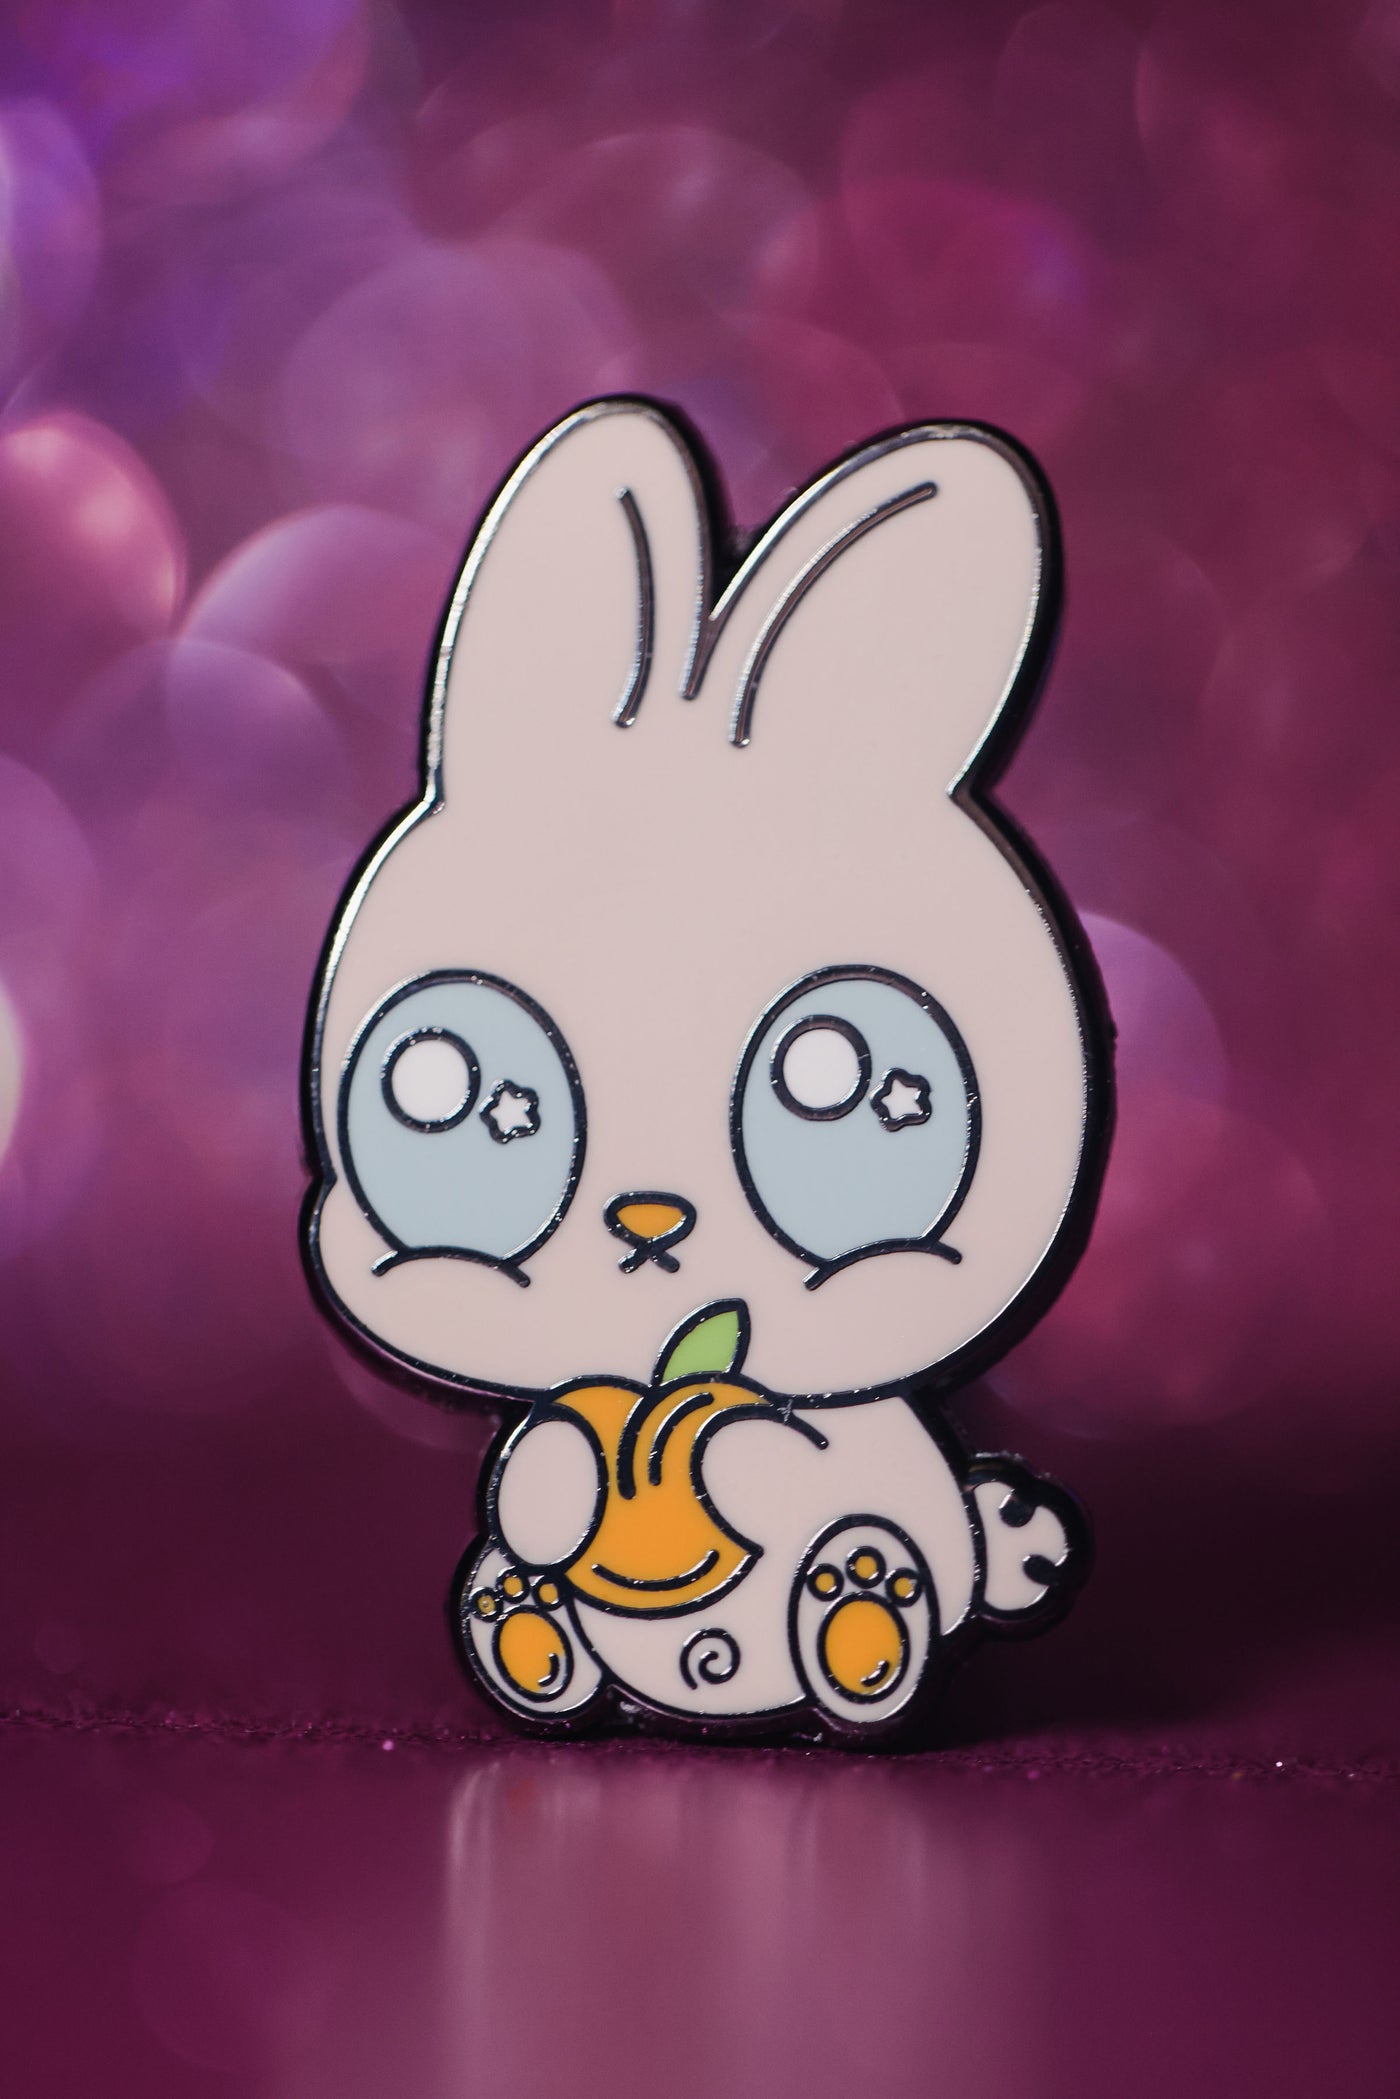 Peach Bunny Enamel Pin - Spooky and Kawaii Bunnies Collection